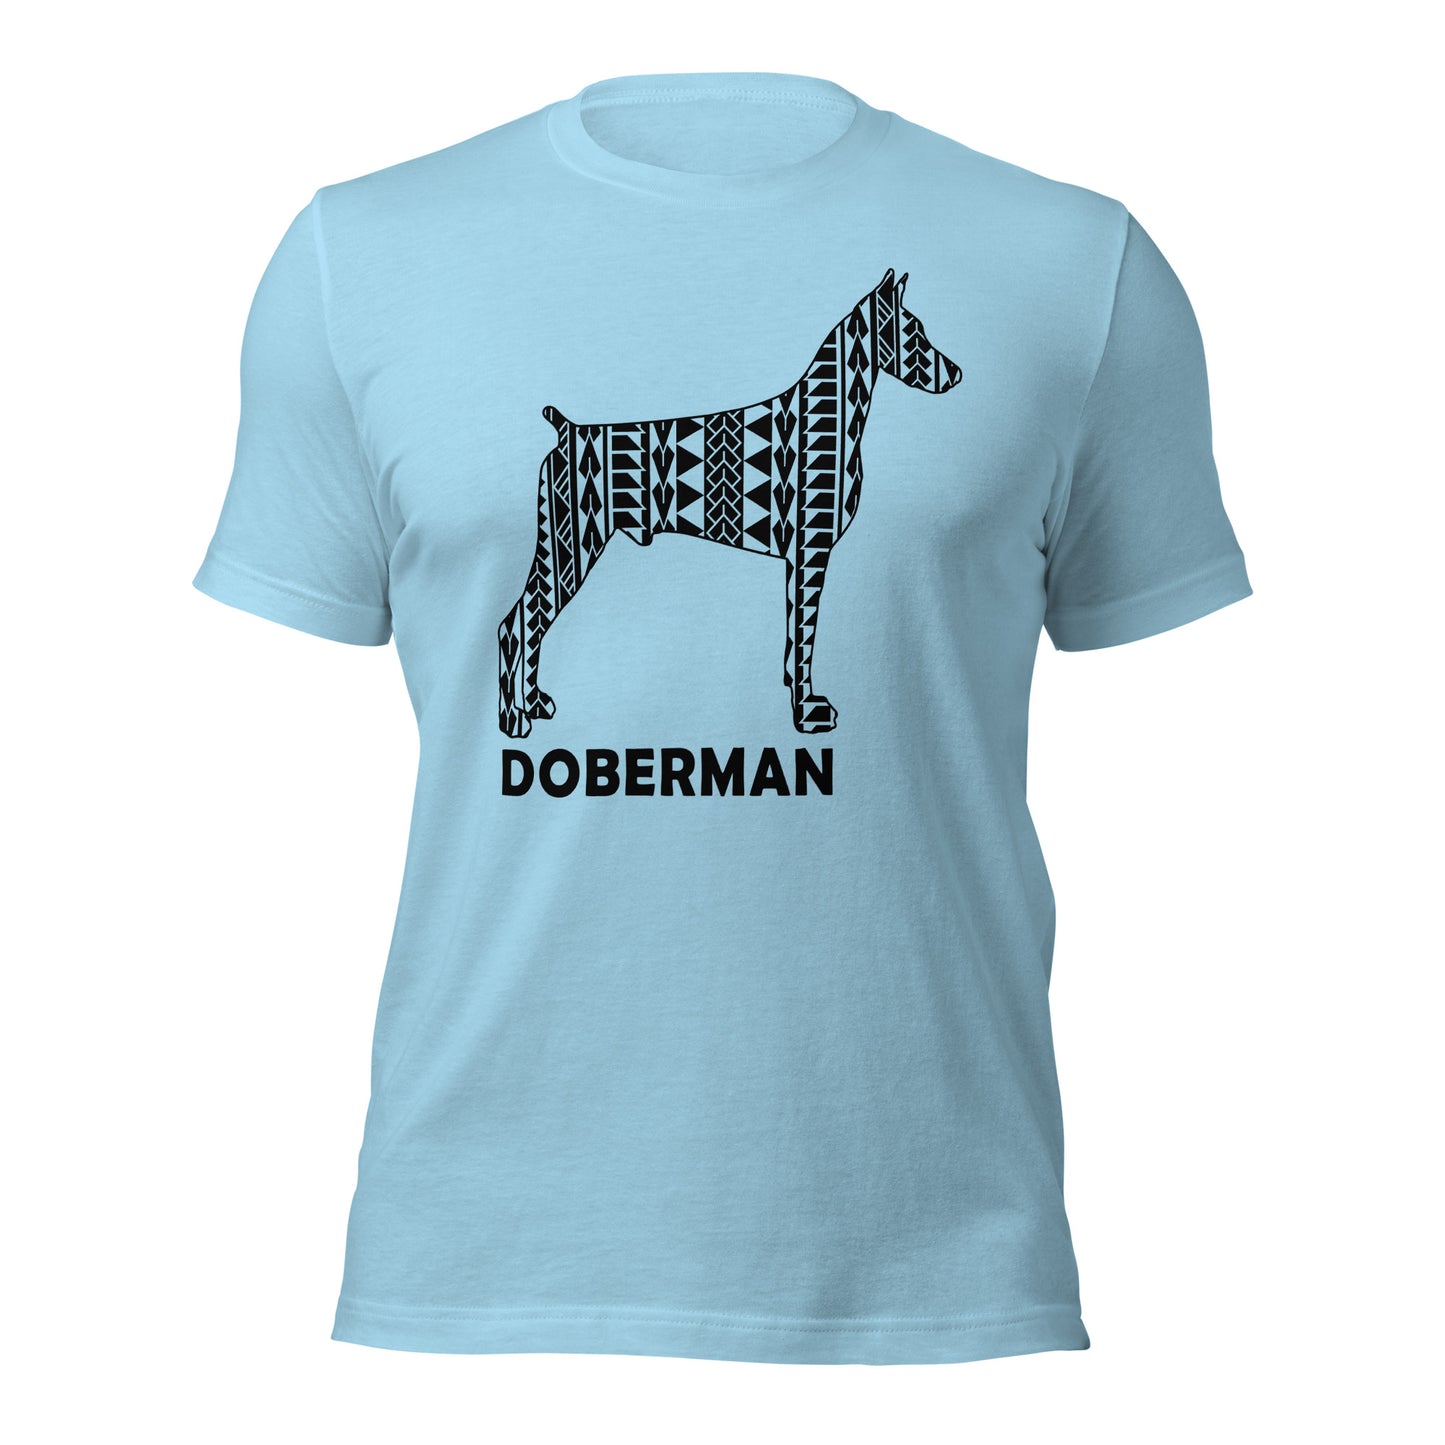 Doberman Polynesian t-shirt blue by Dog Artistry.